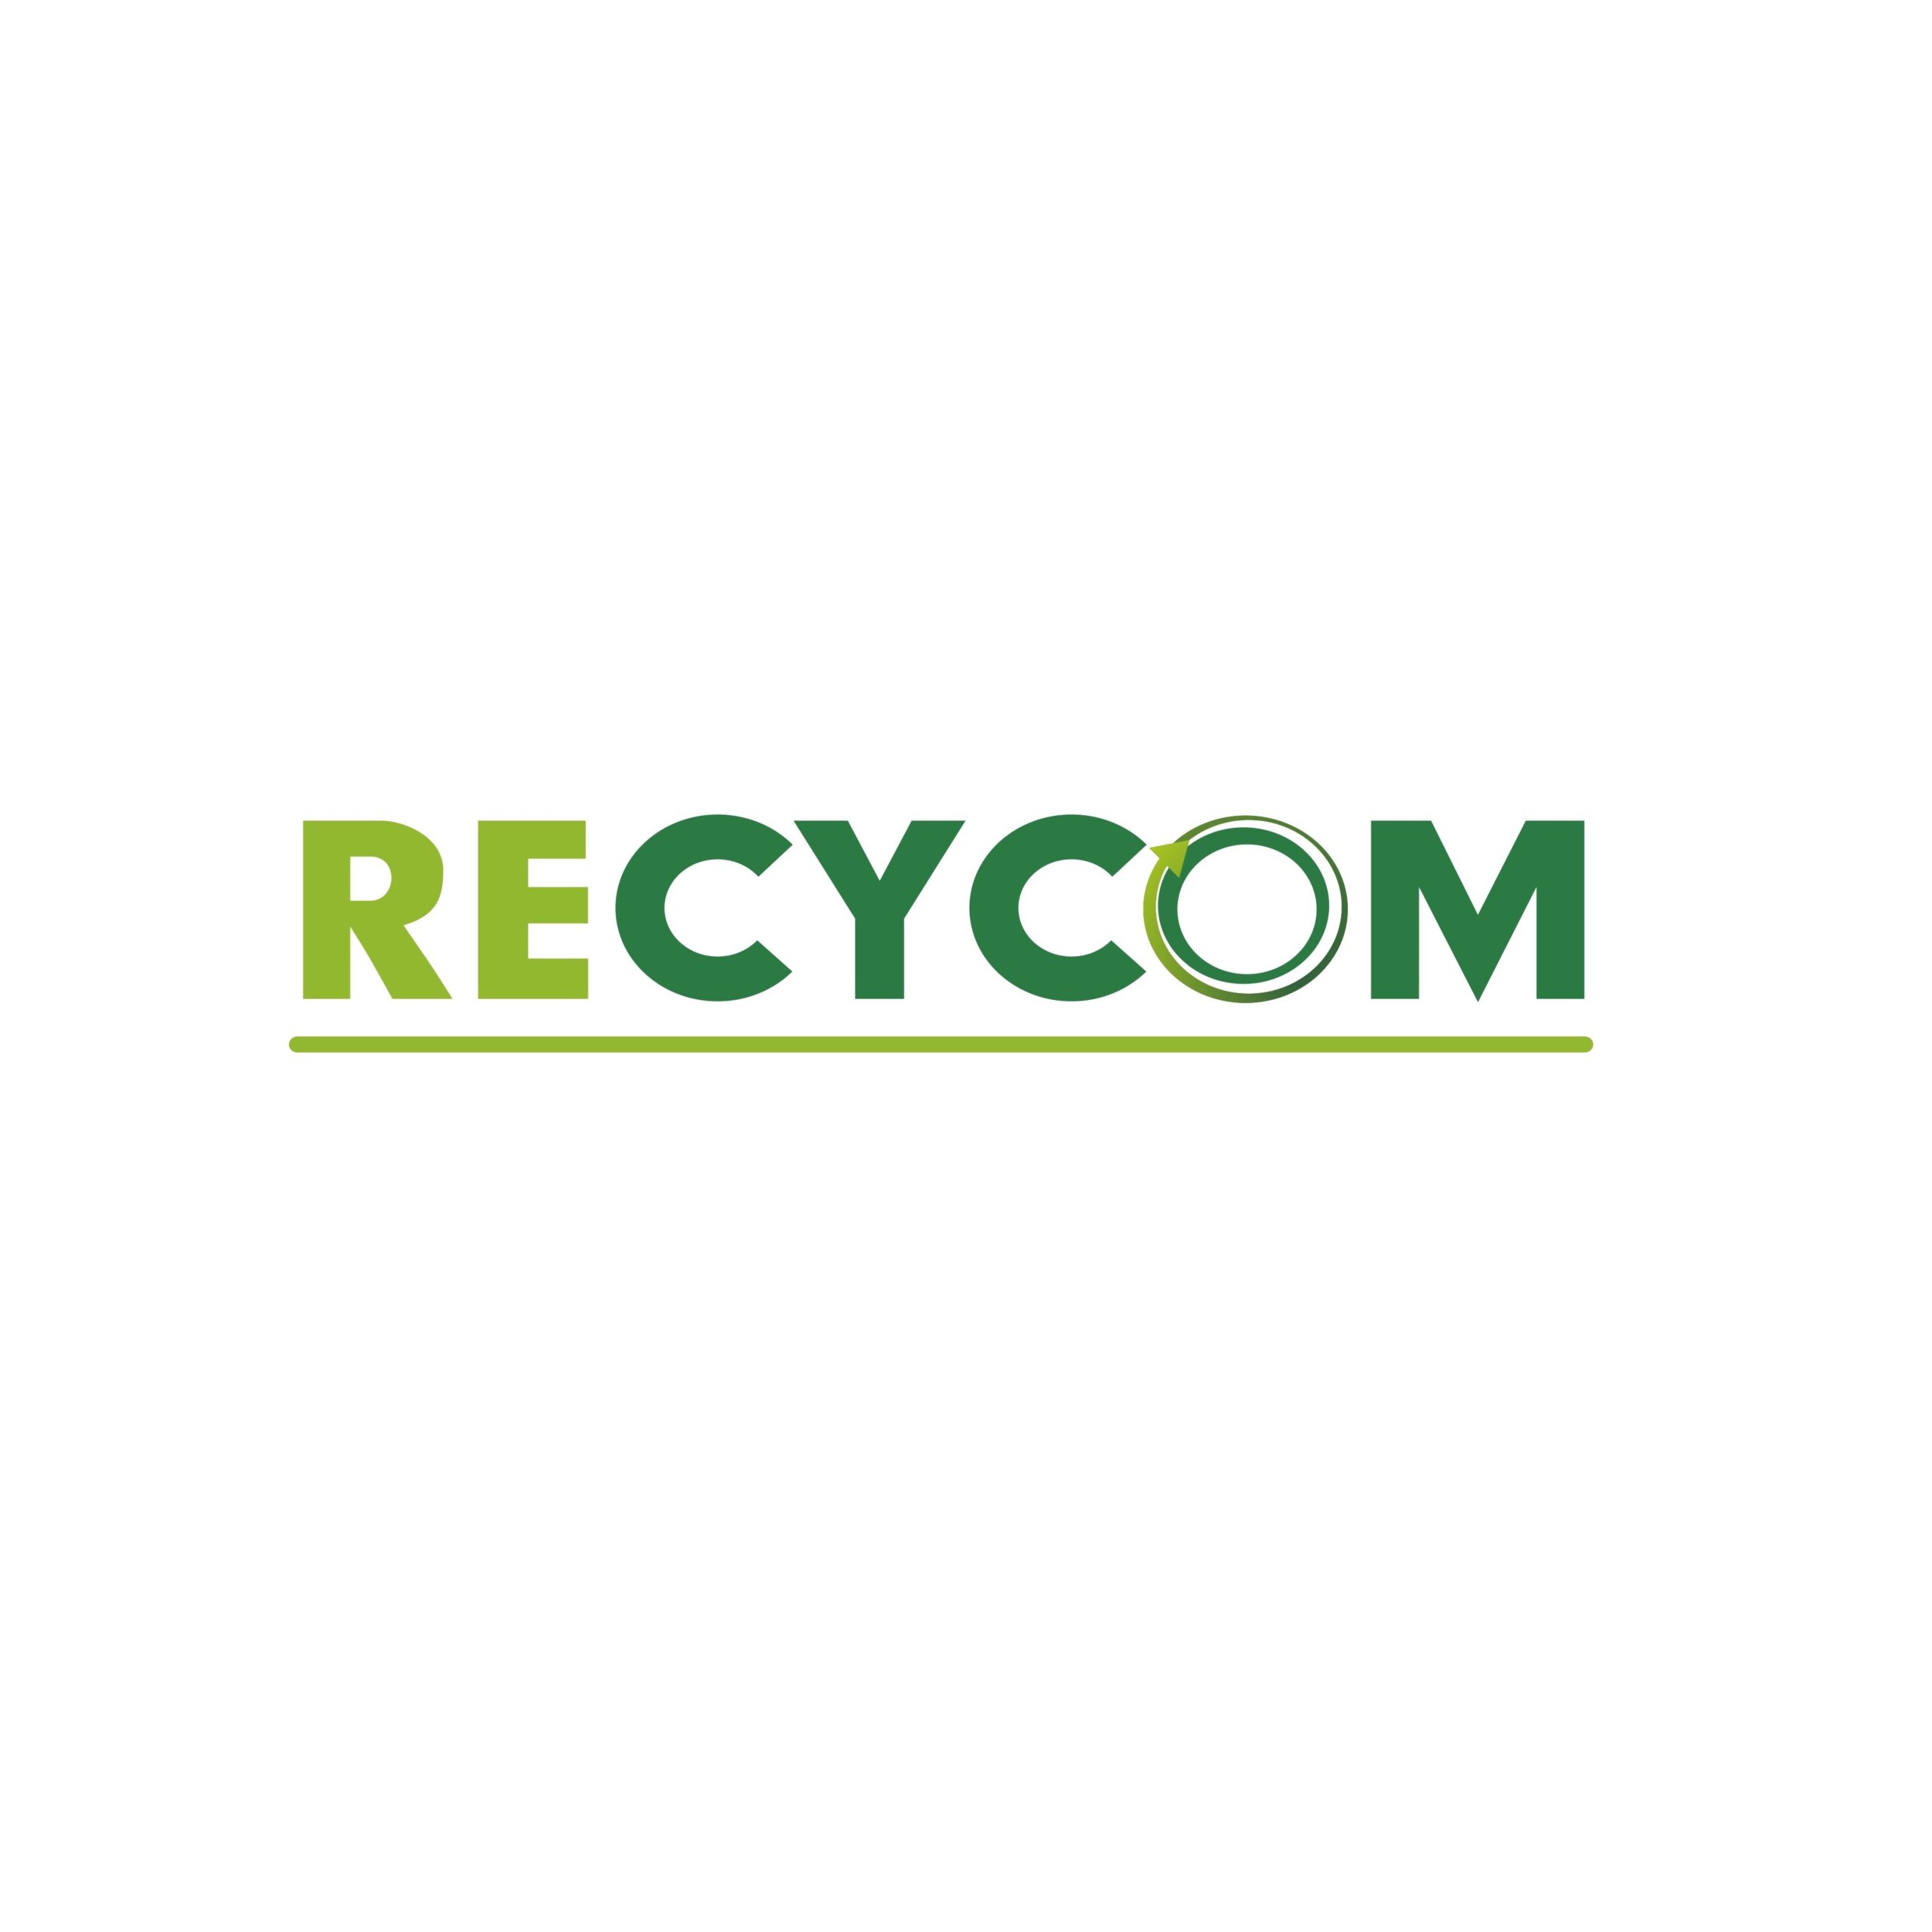 Recycom